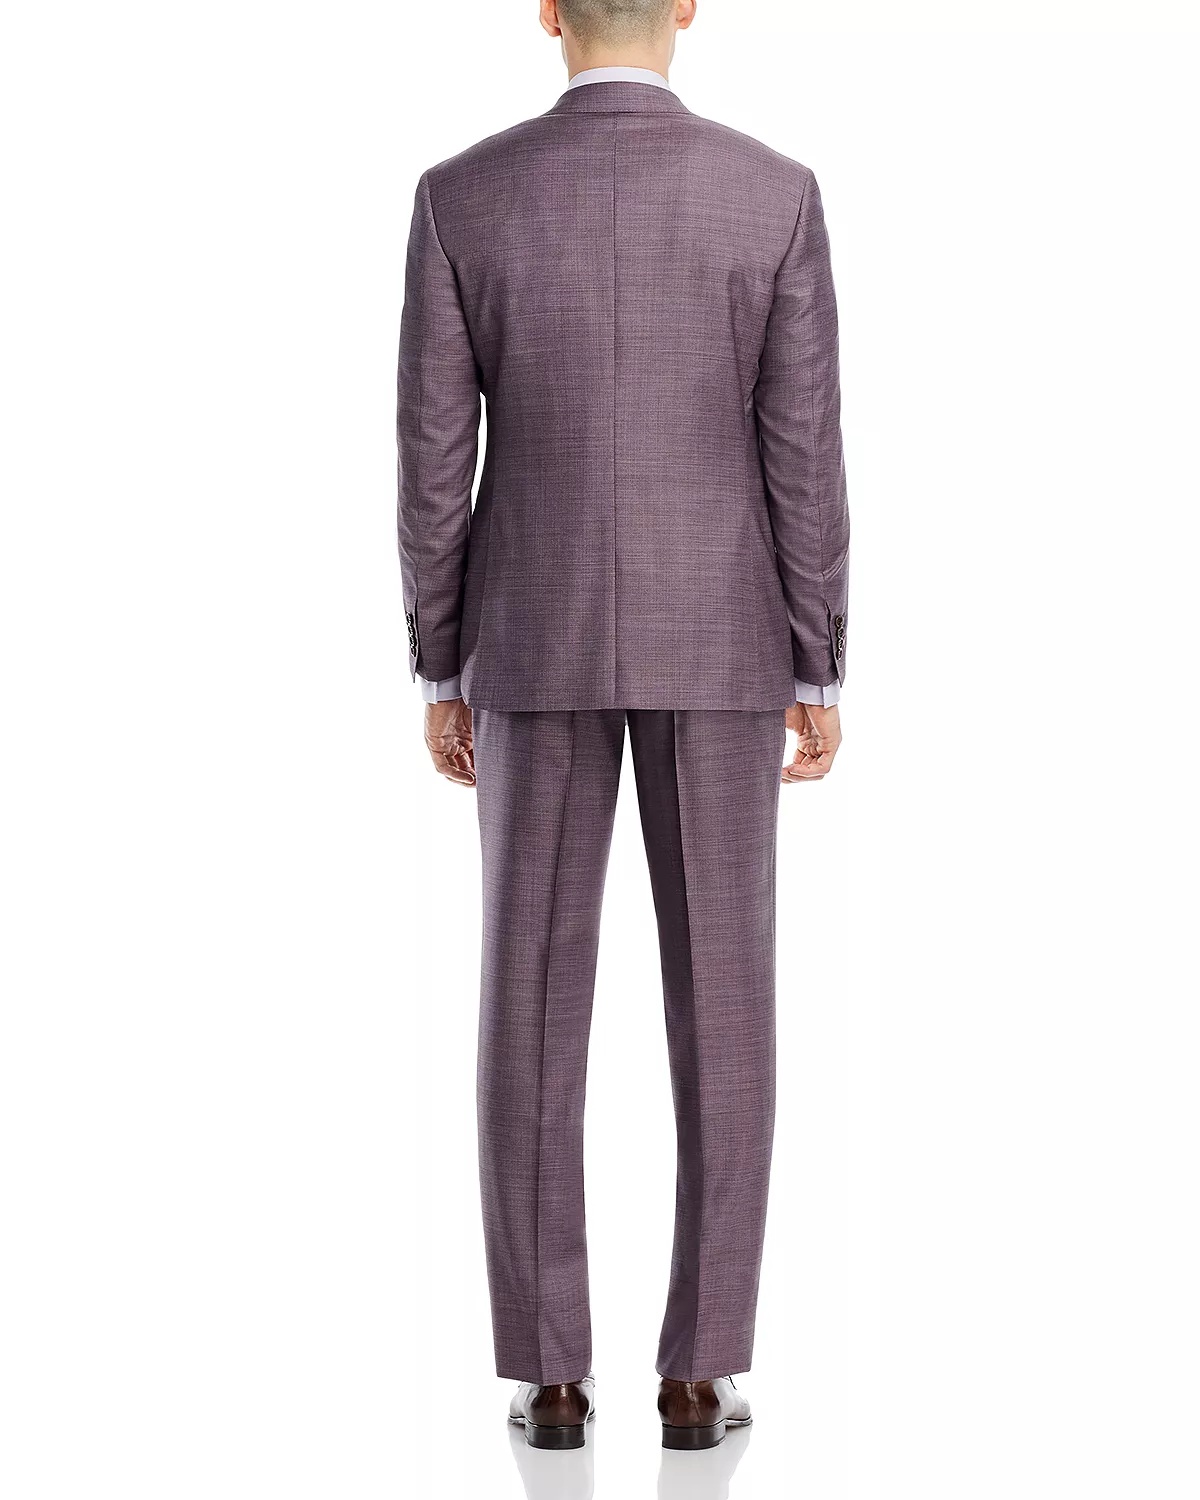 Siena Sharkskin Classic Fit Suit - 4